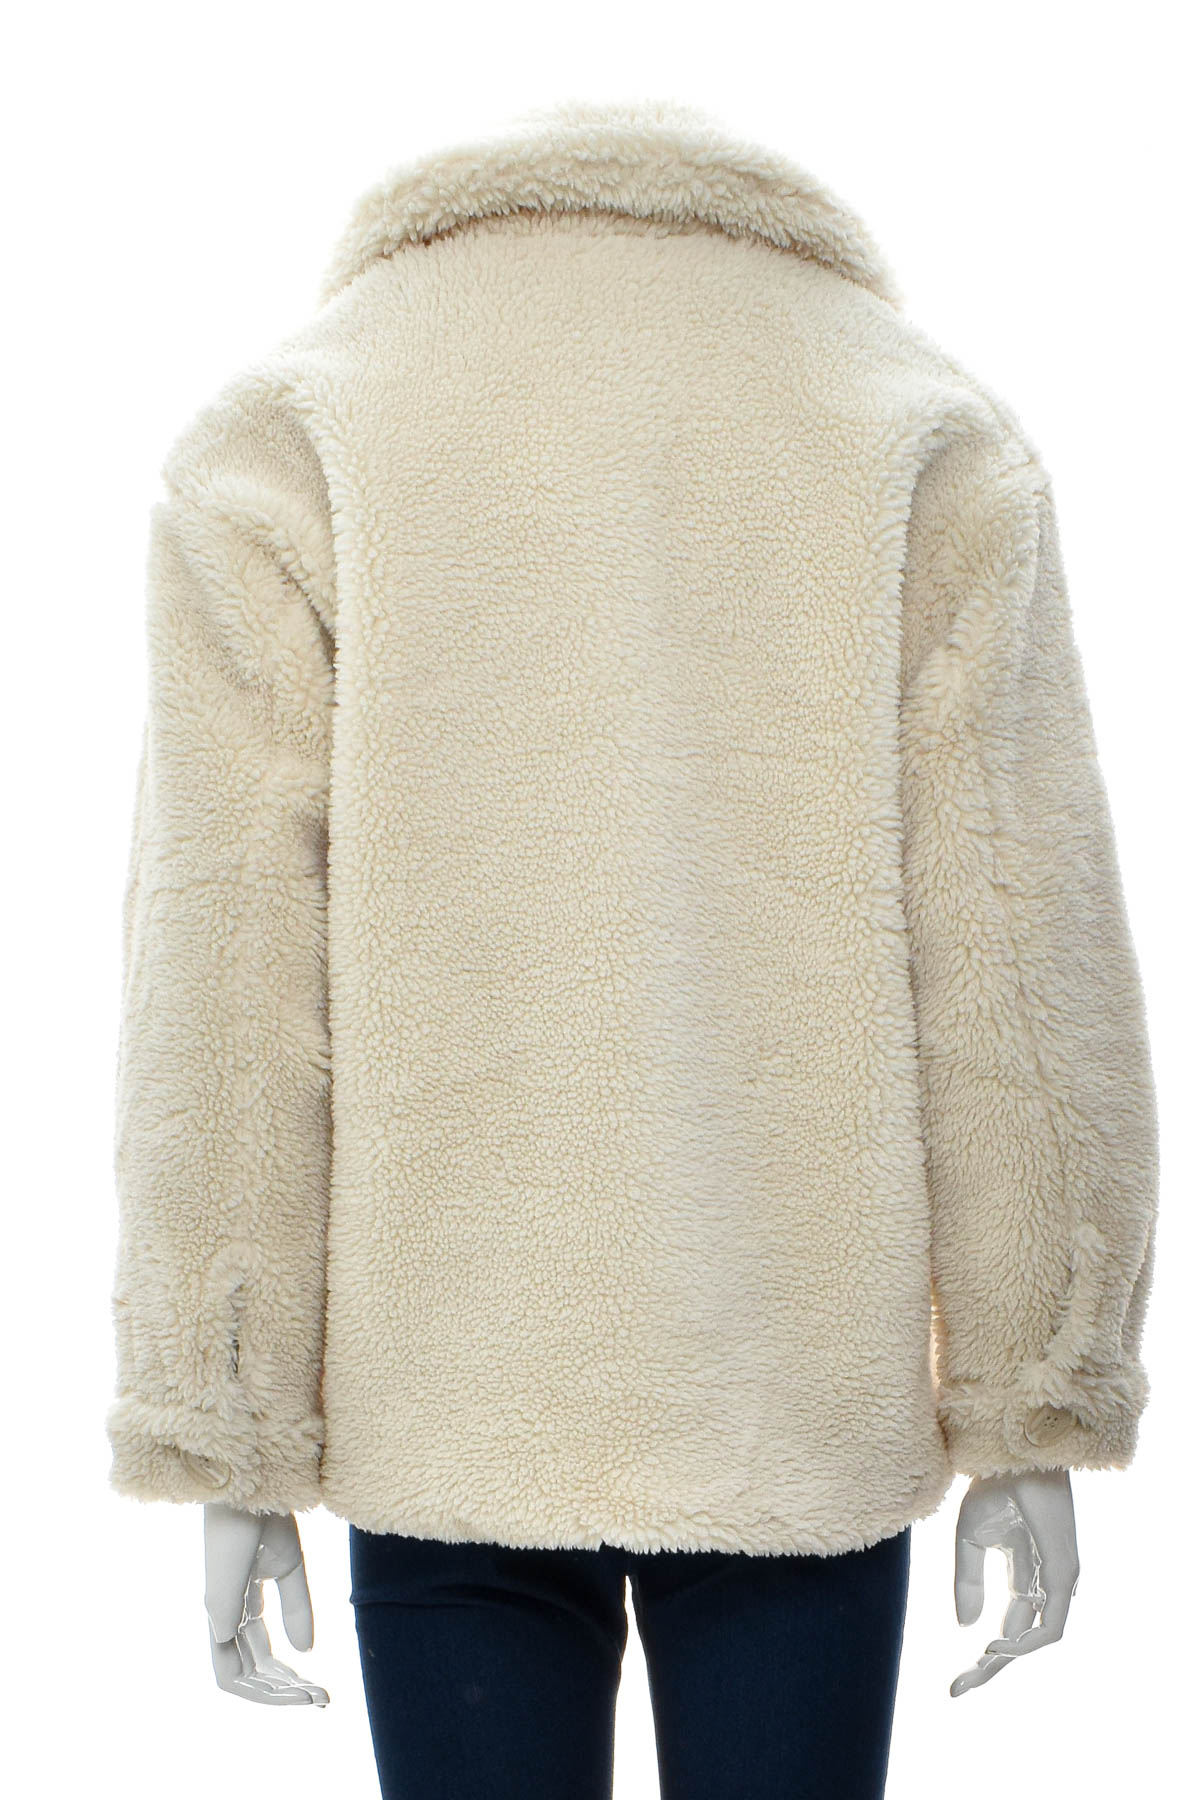 Women's coat - Pull & Bear - 1